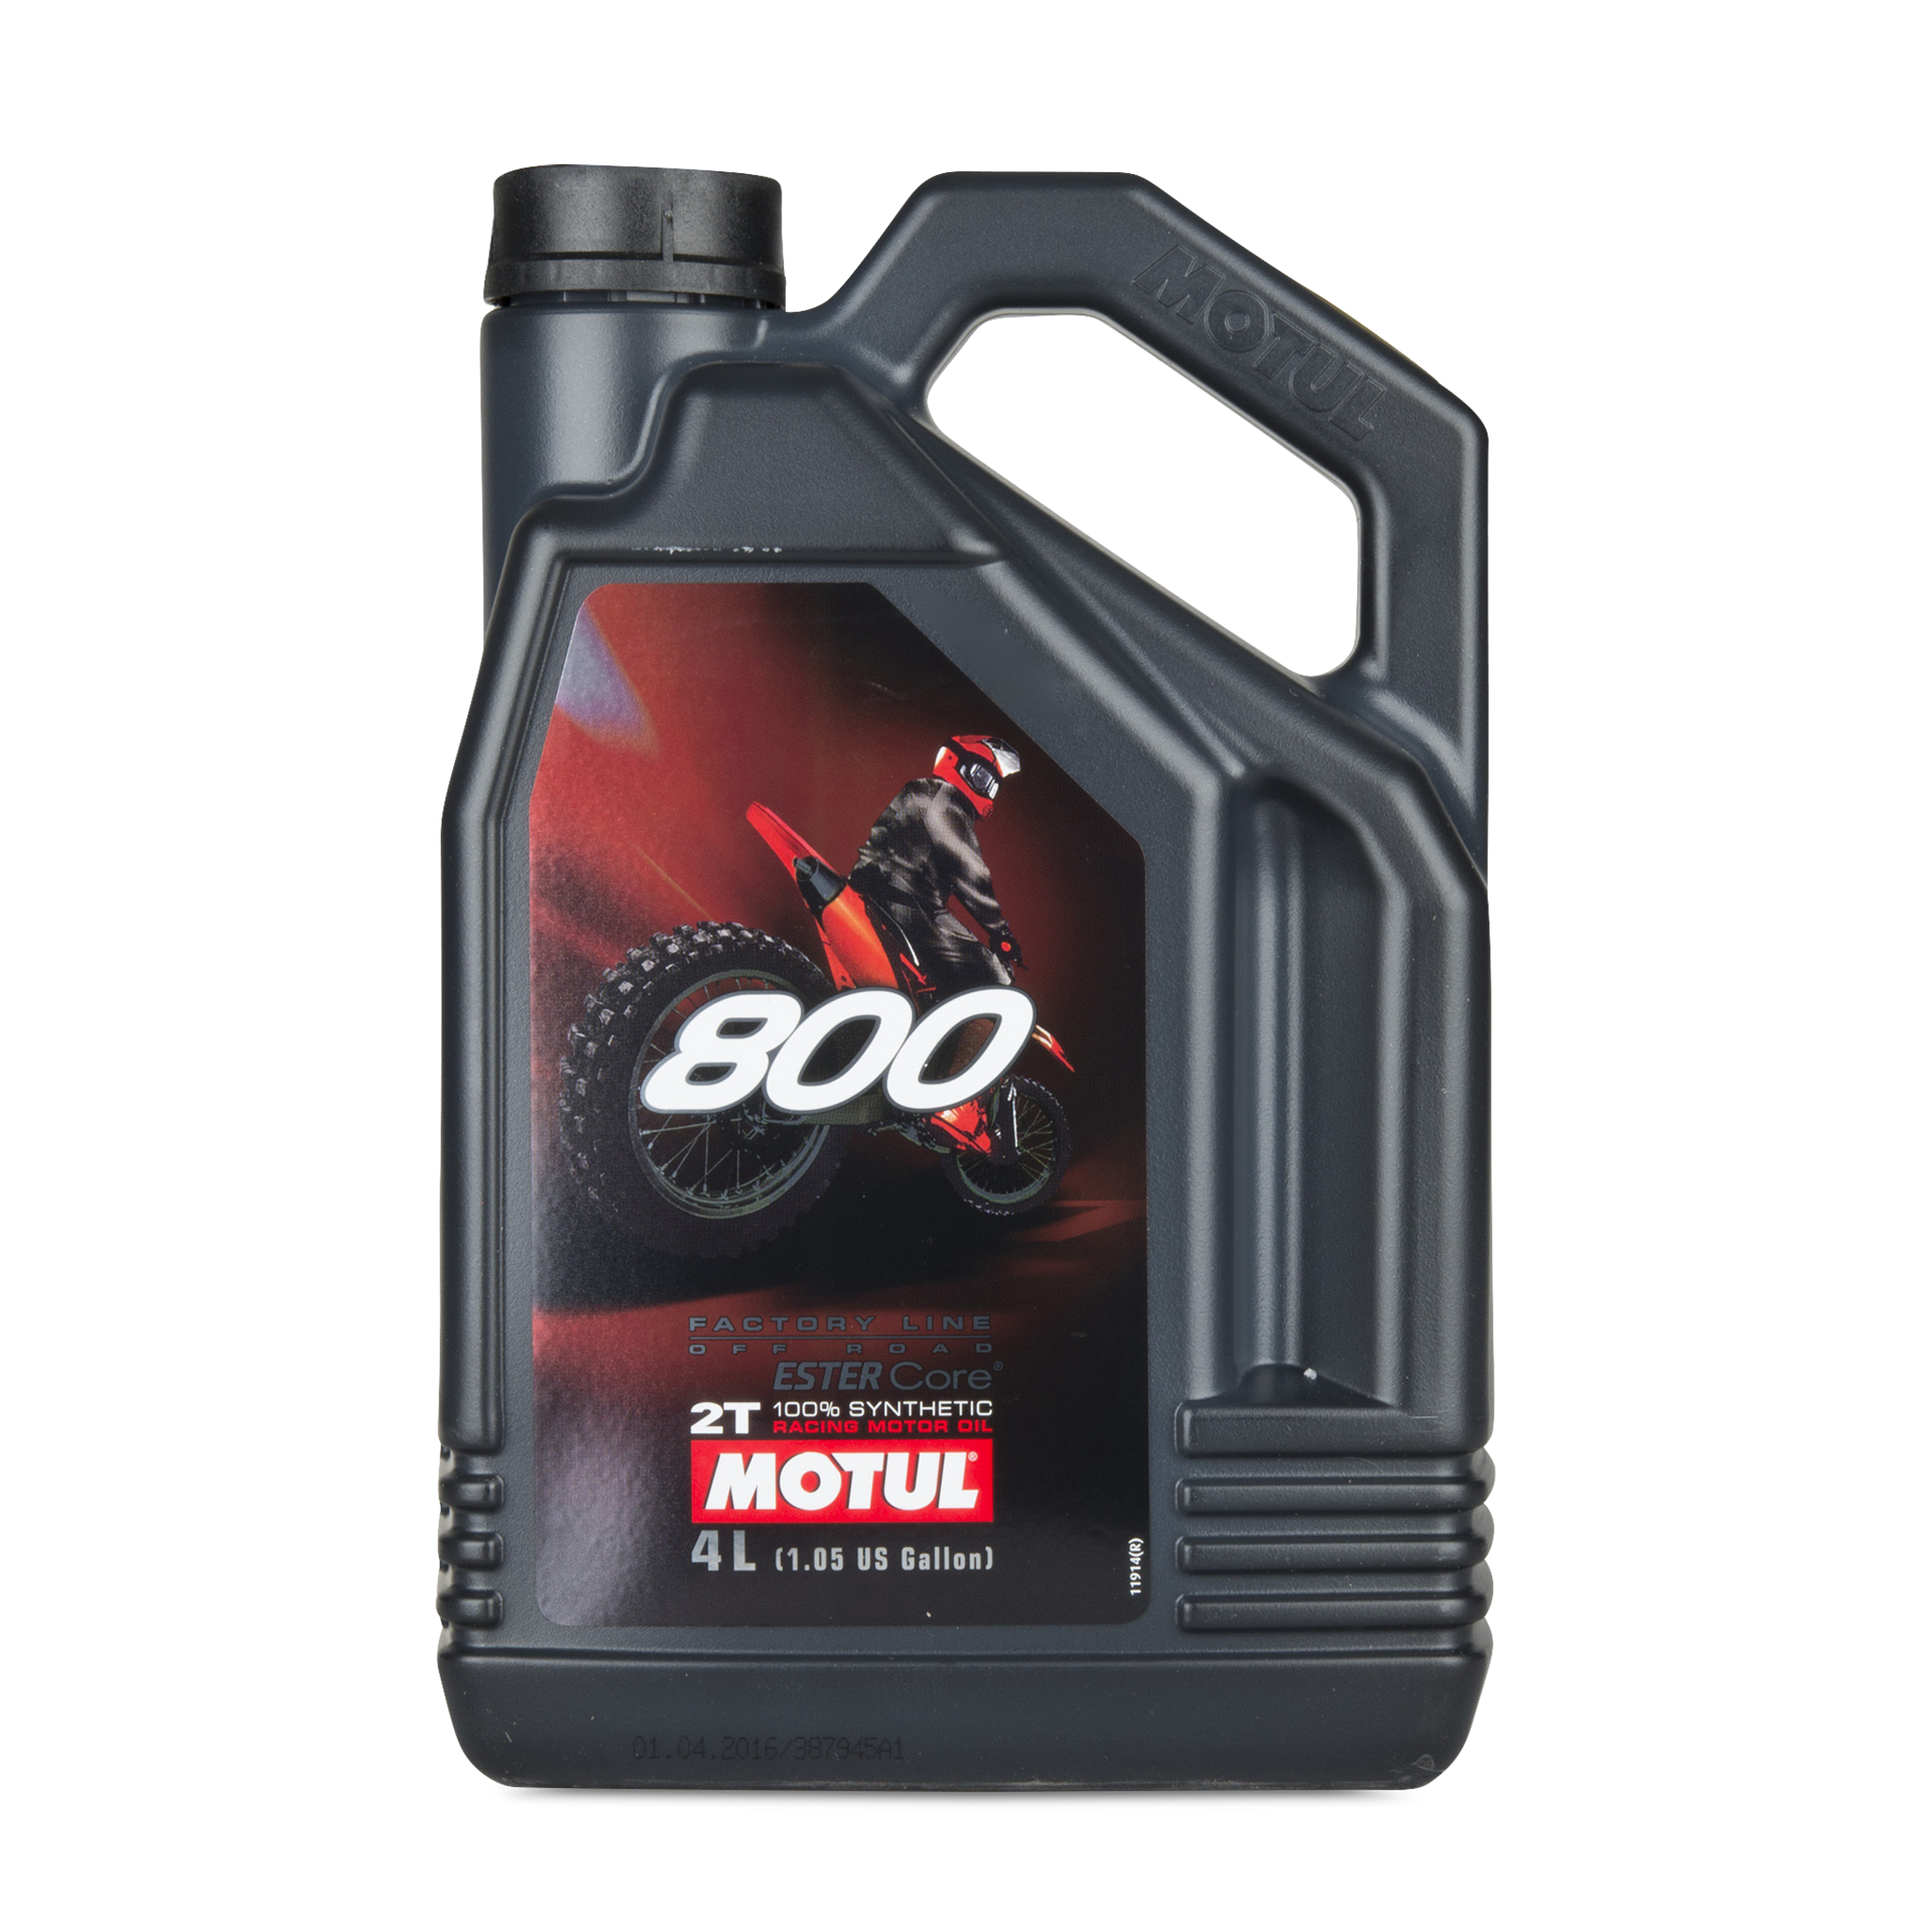 Motul 800 Offroad 2T 4L Oil Fully synthetic - Now 20% Savings